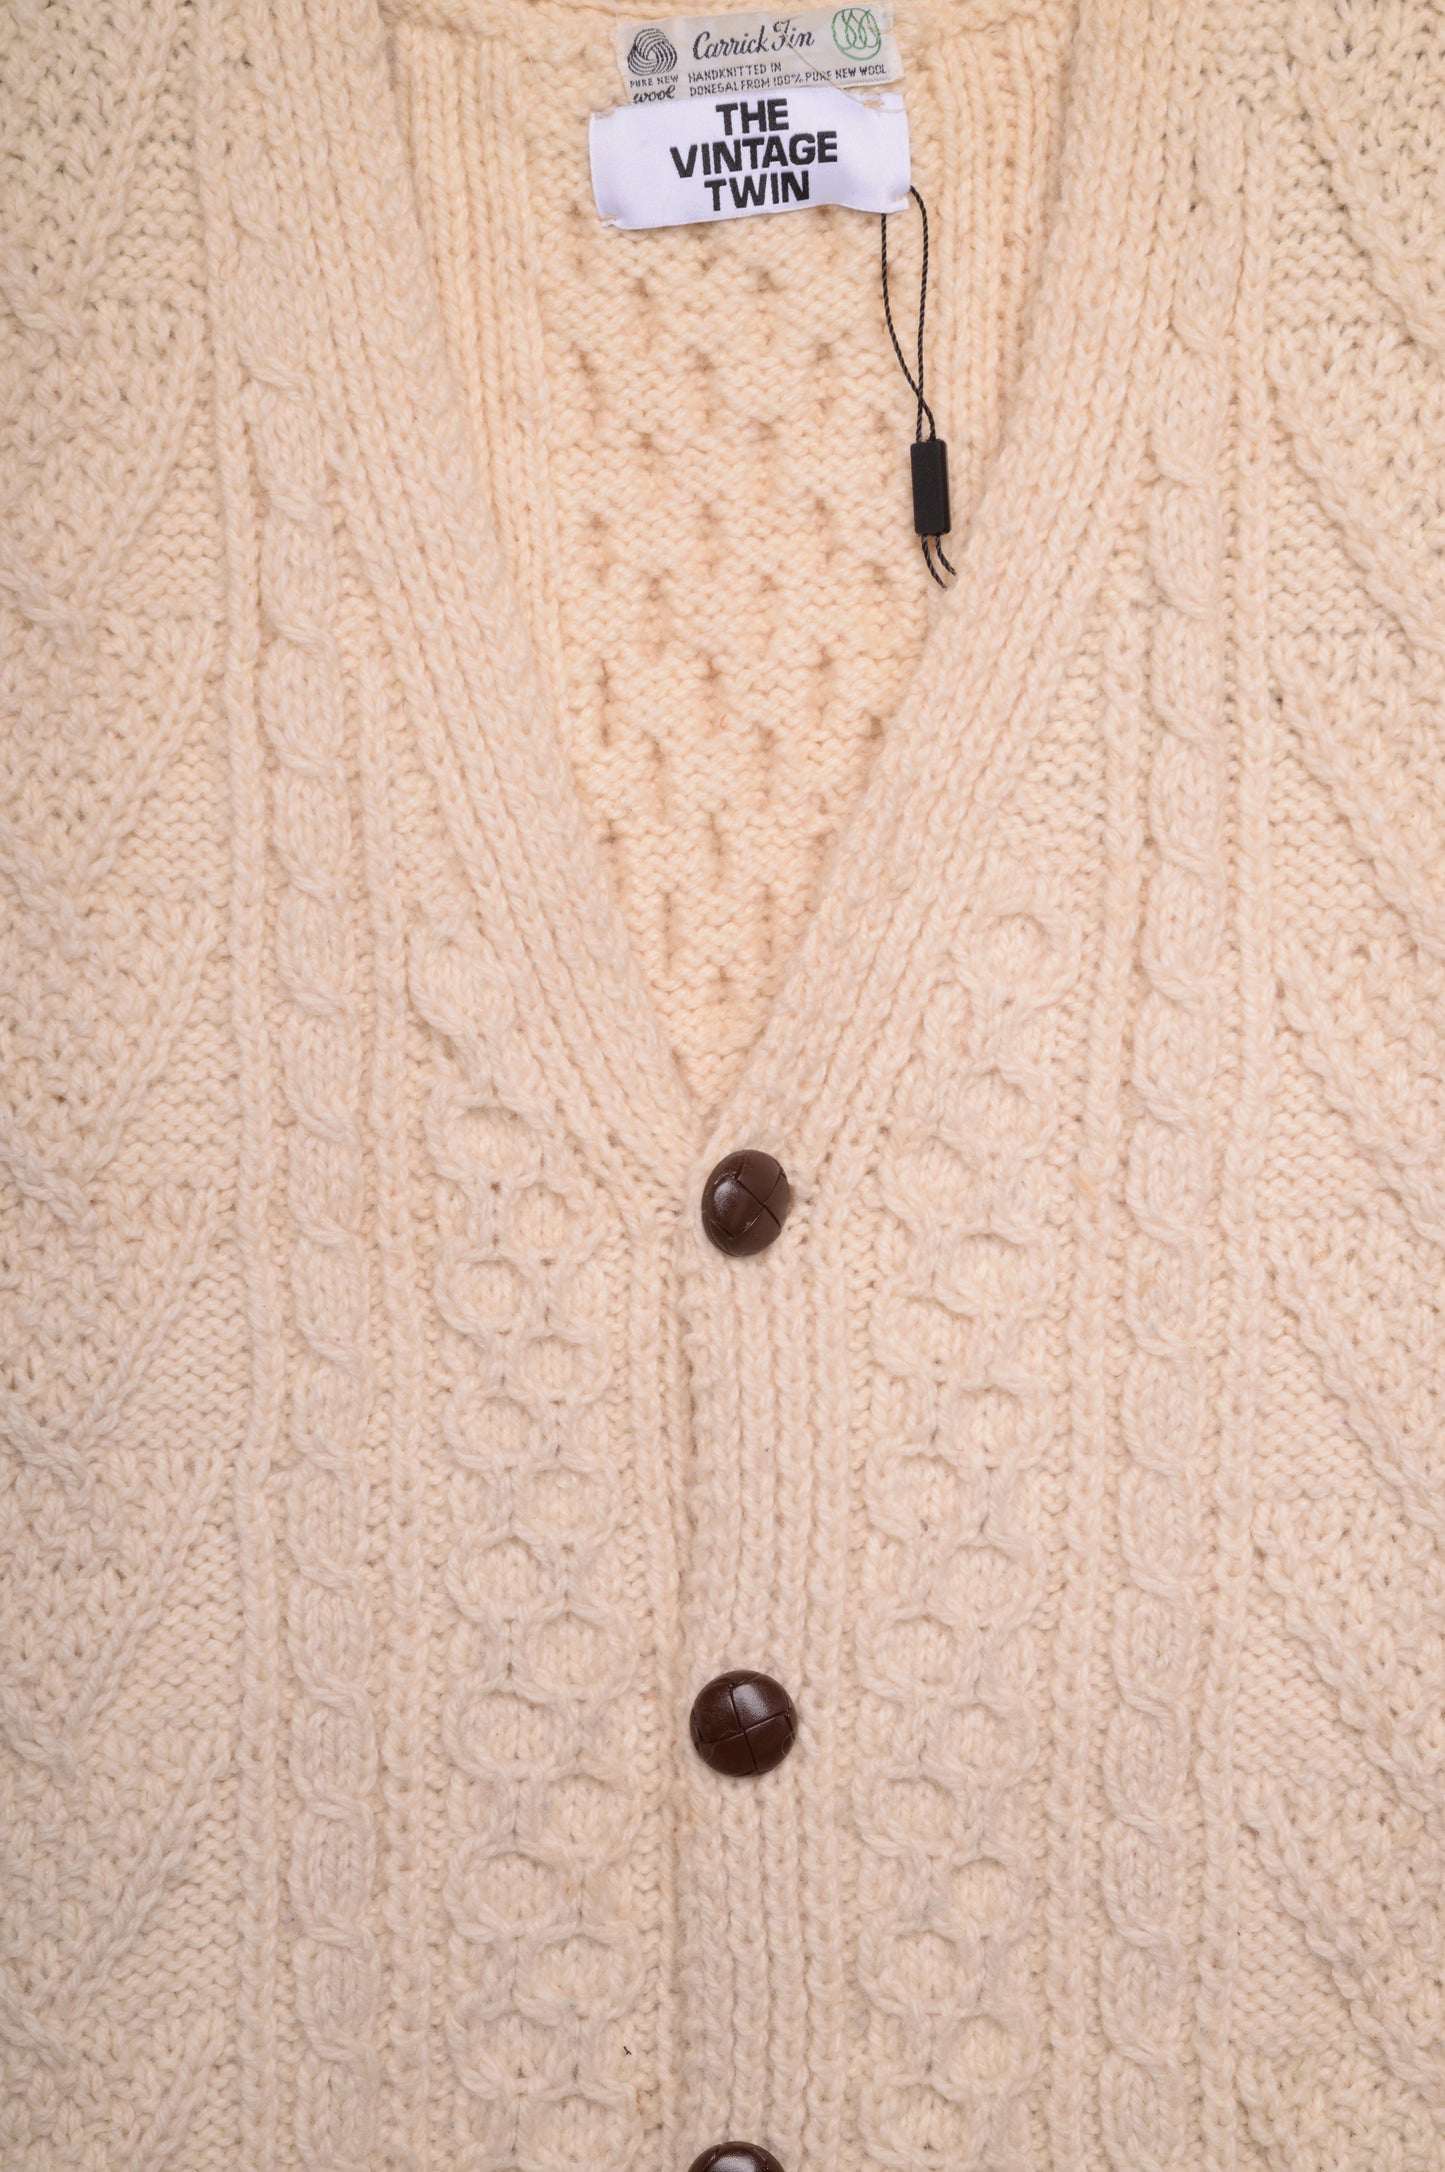 Irish Cable Knit Sweater Vest